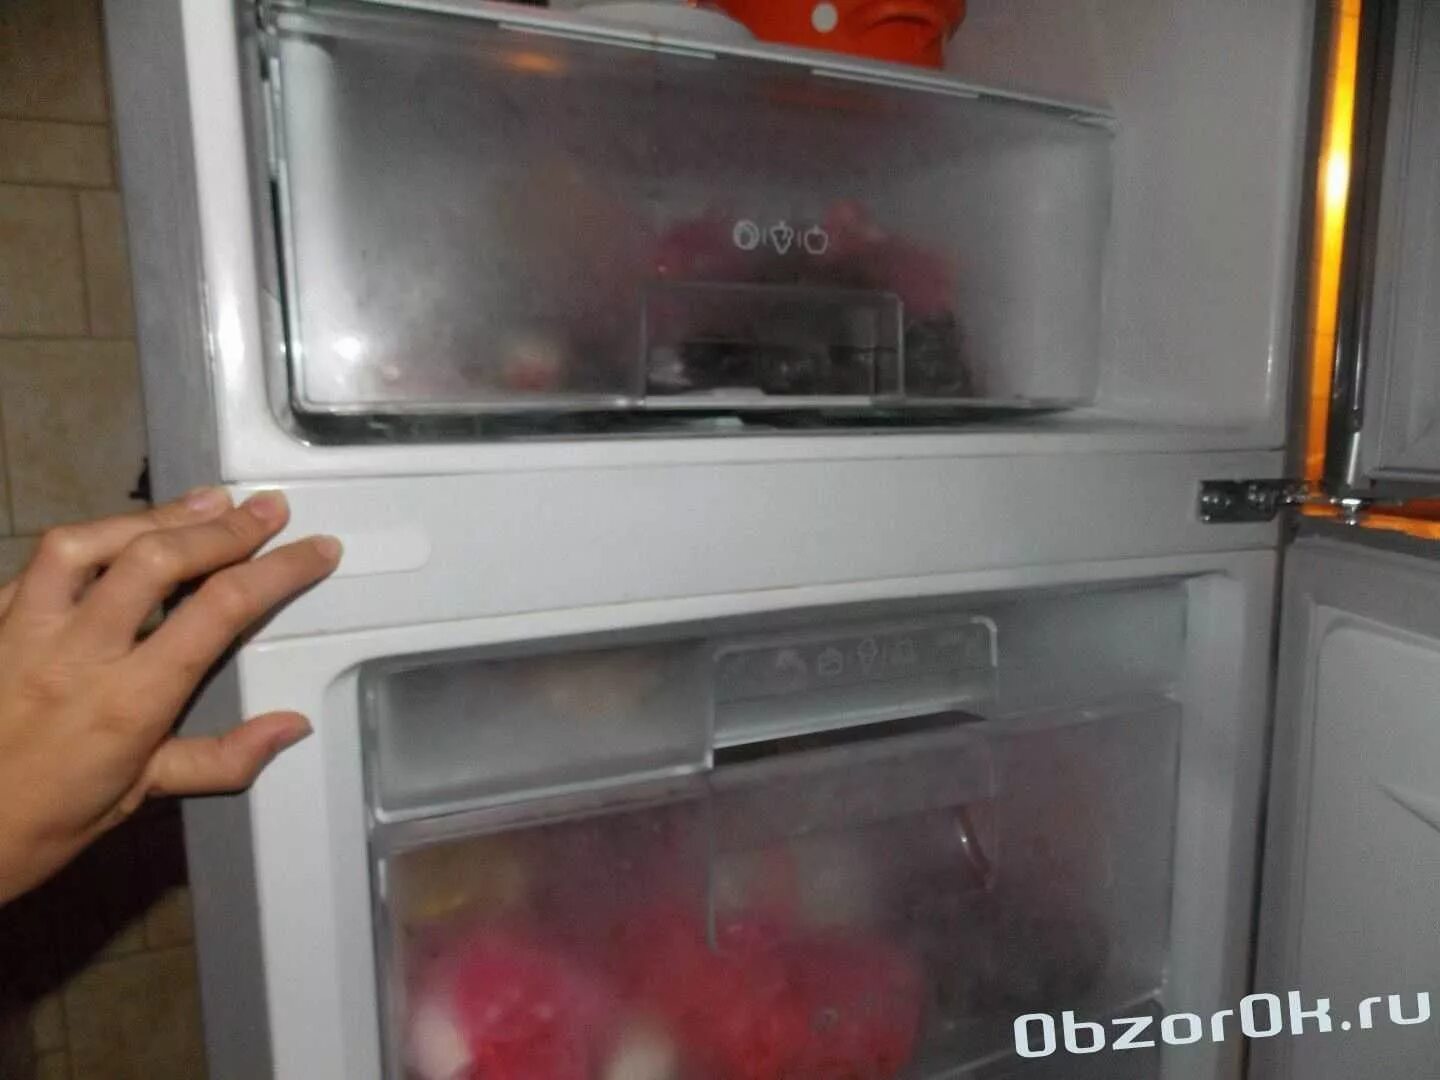 Греется холодильника морозилки